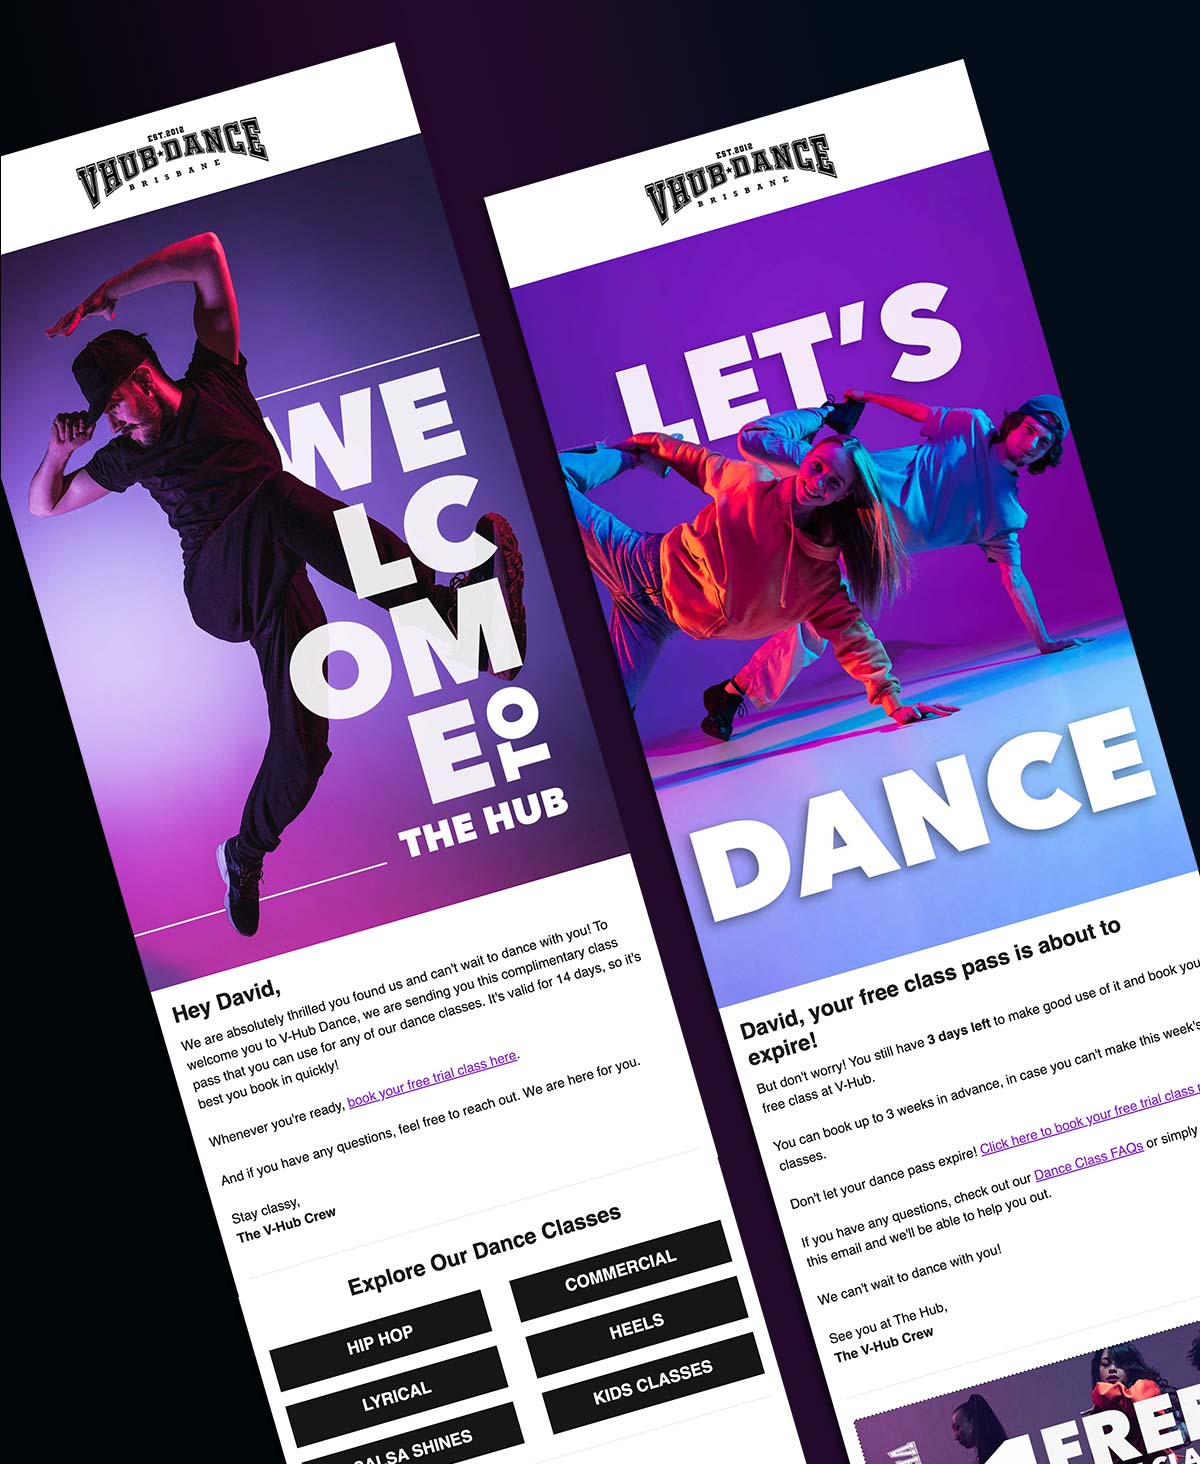 Dance Studio Marketing Brisbane for V-Hub Dance - FlySocial Digital